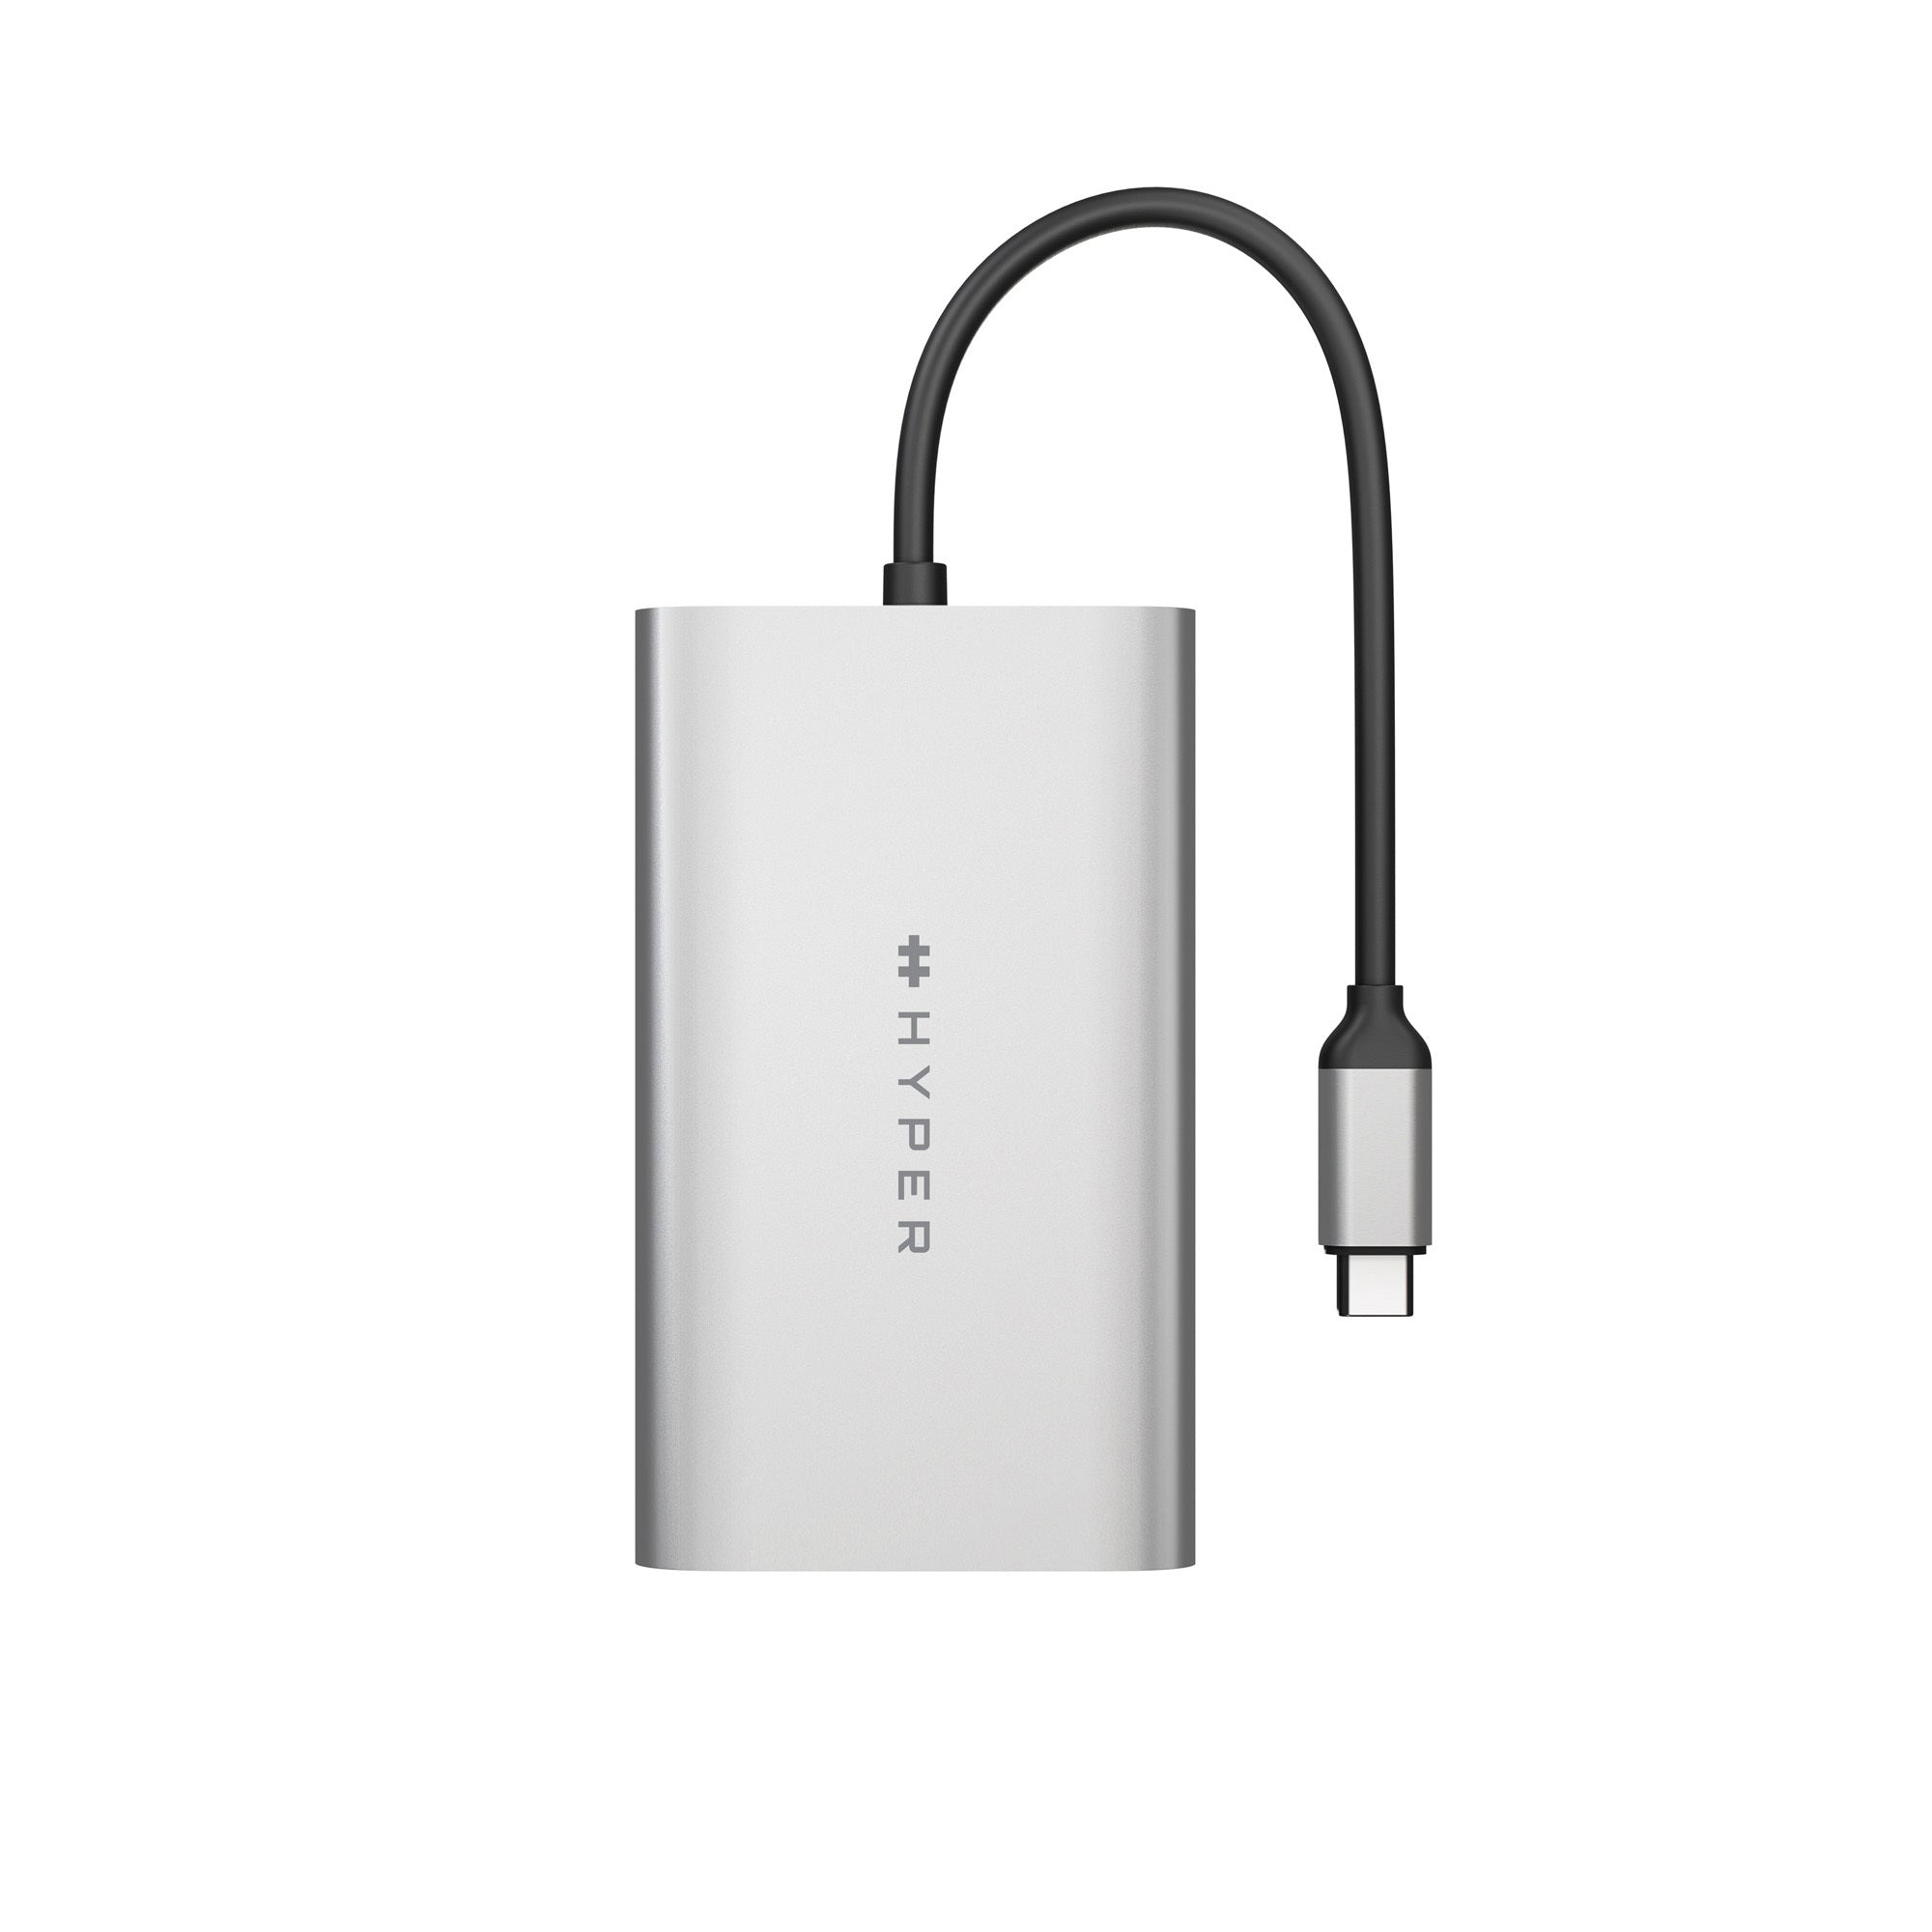 Targus HyperDrive Dual - Videoadapter - 24 pin USB-C zu HDMI, 24 pin USB-C - USB-Stromversorgung (100 W)